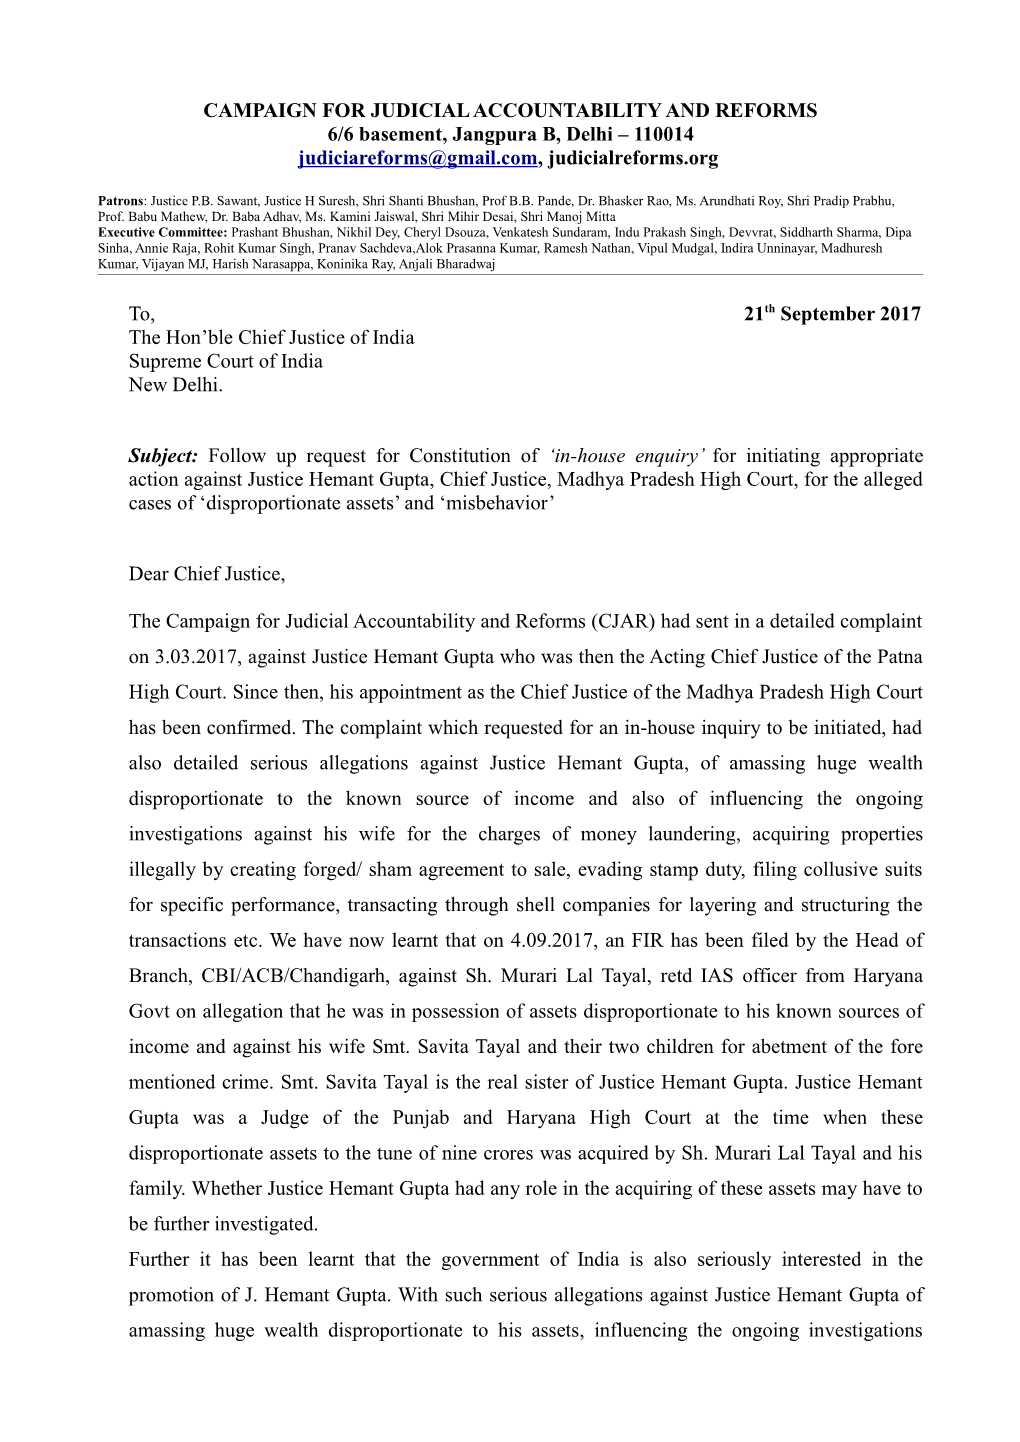 Letter to Dipak Misra